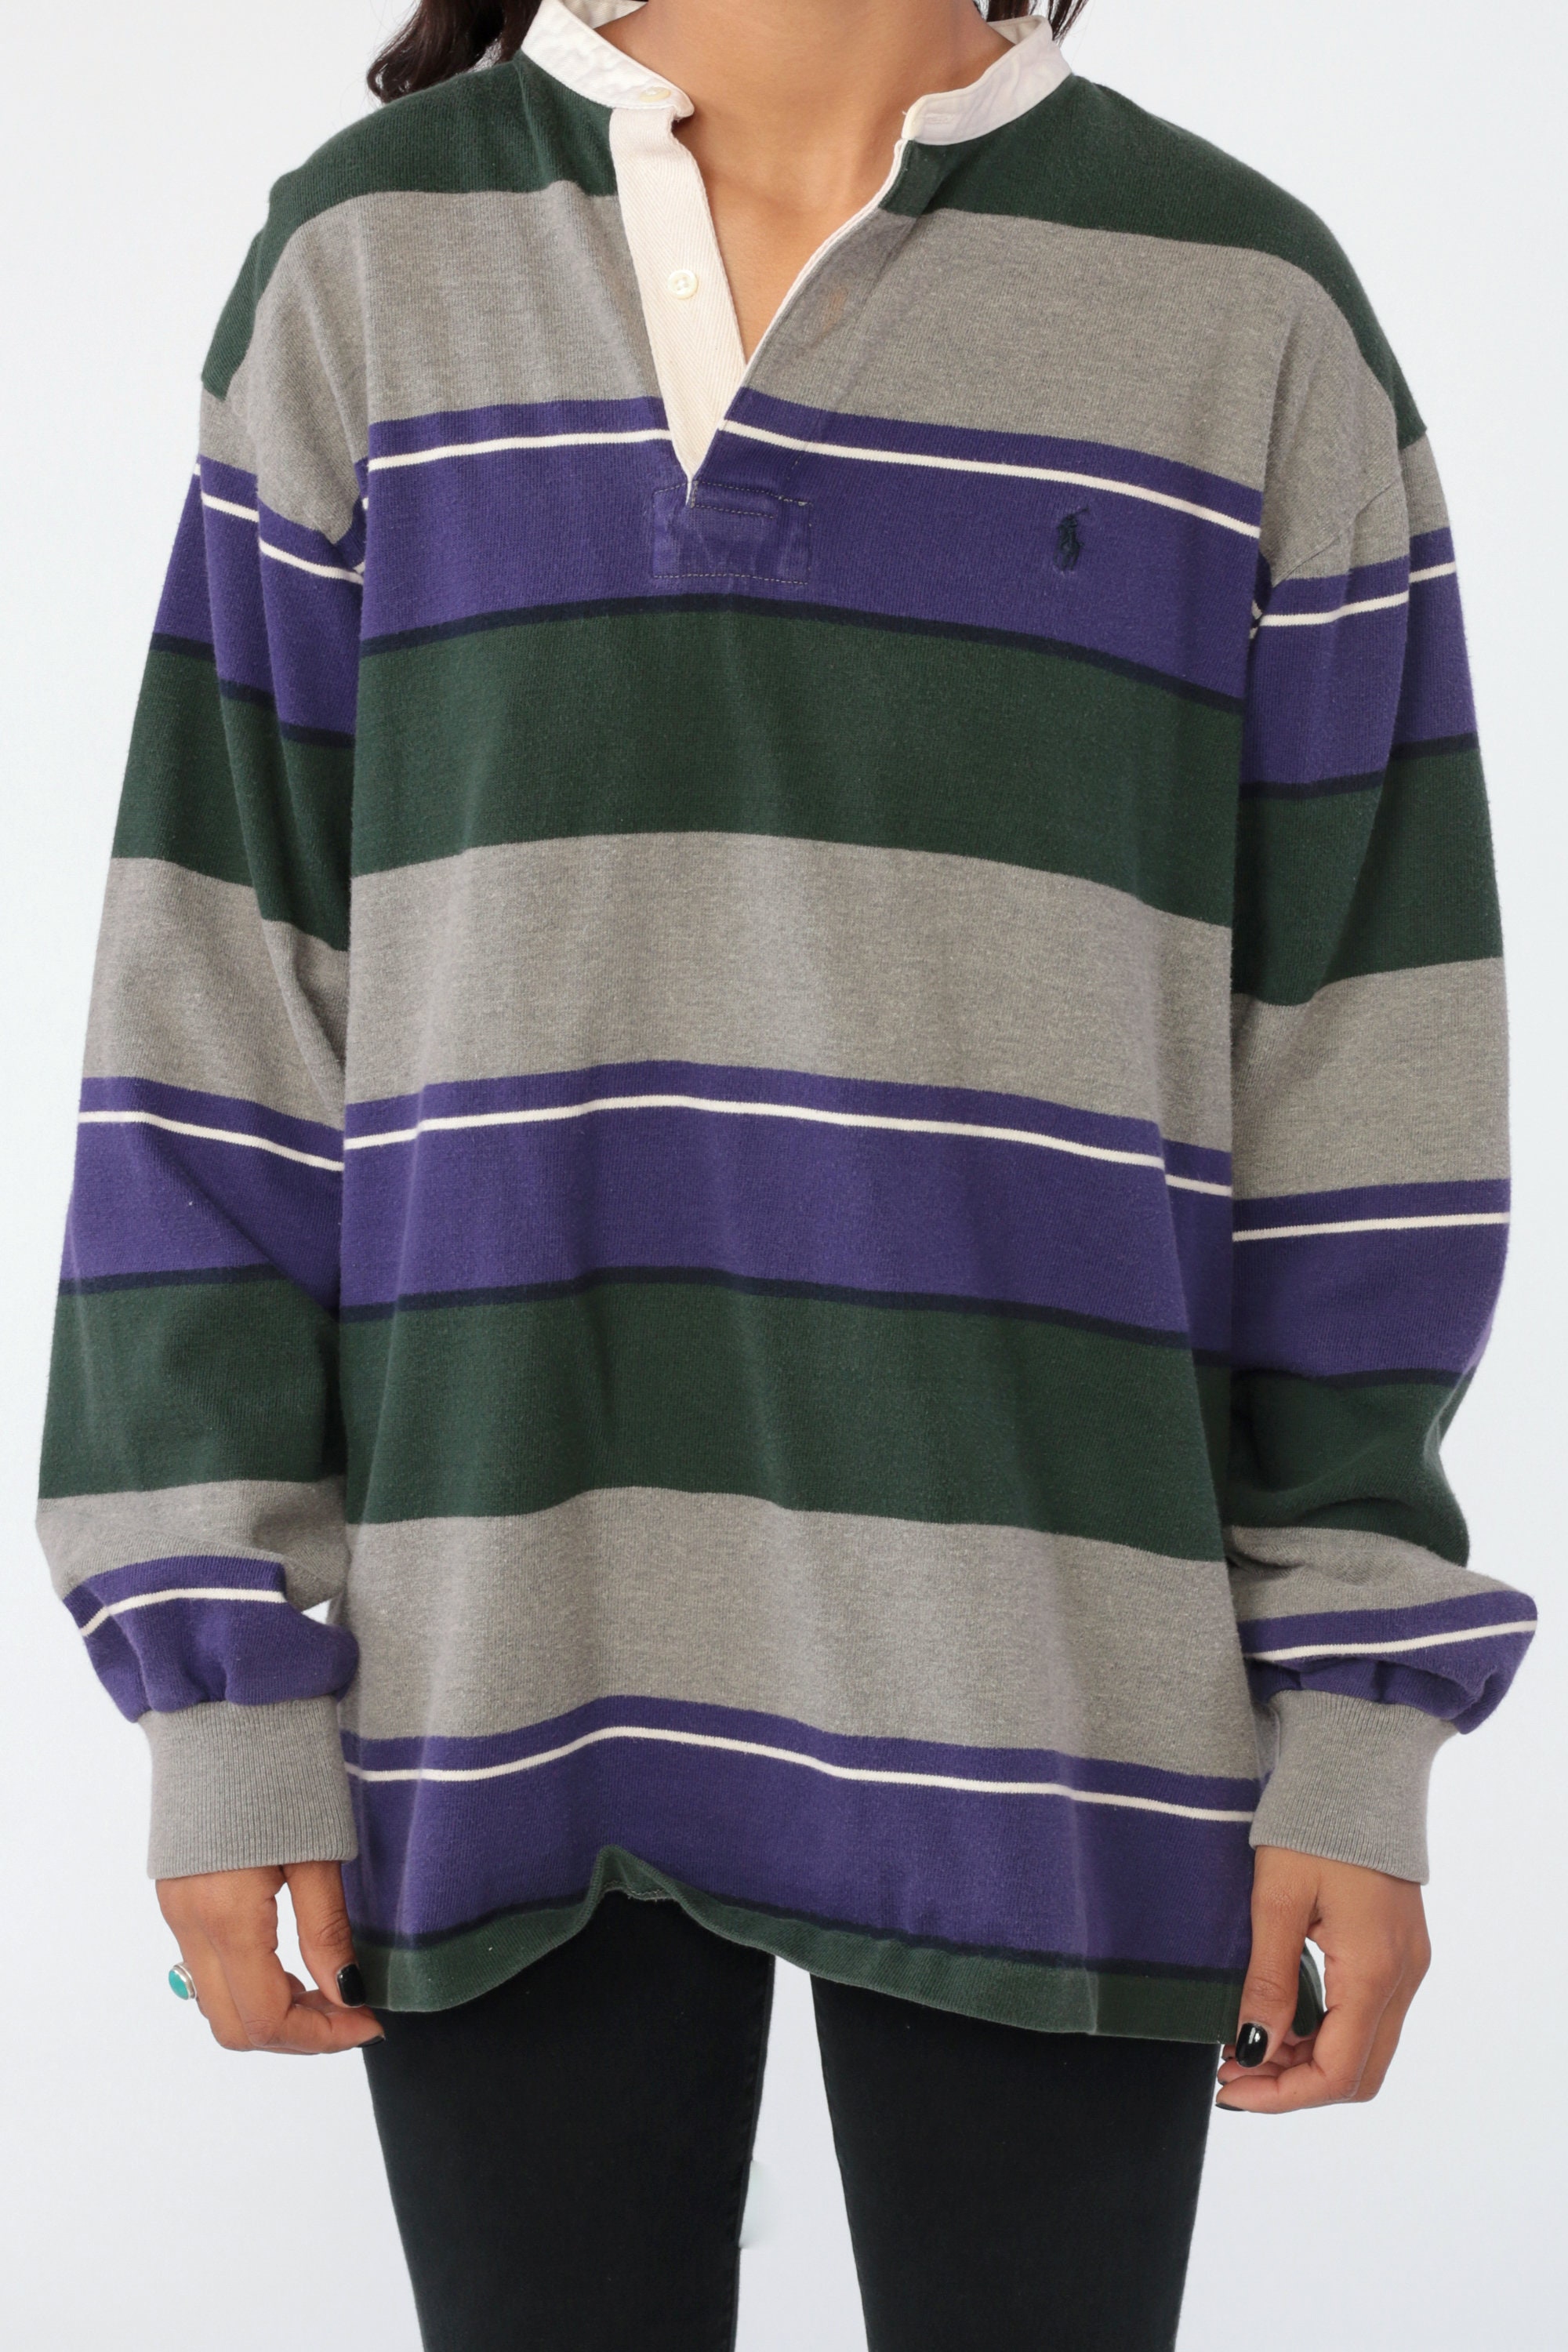 Ralph Lauren Polo Shirt 90s Grunge Striped Long Sleeve Purple Baggy